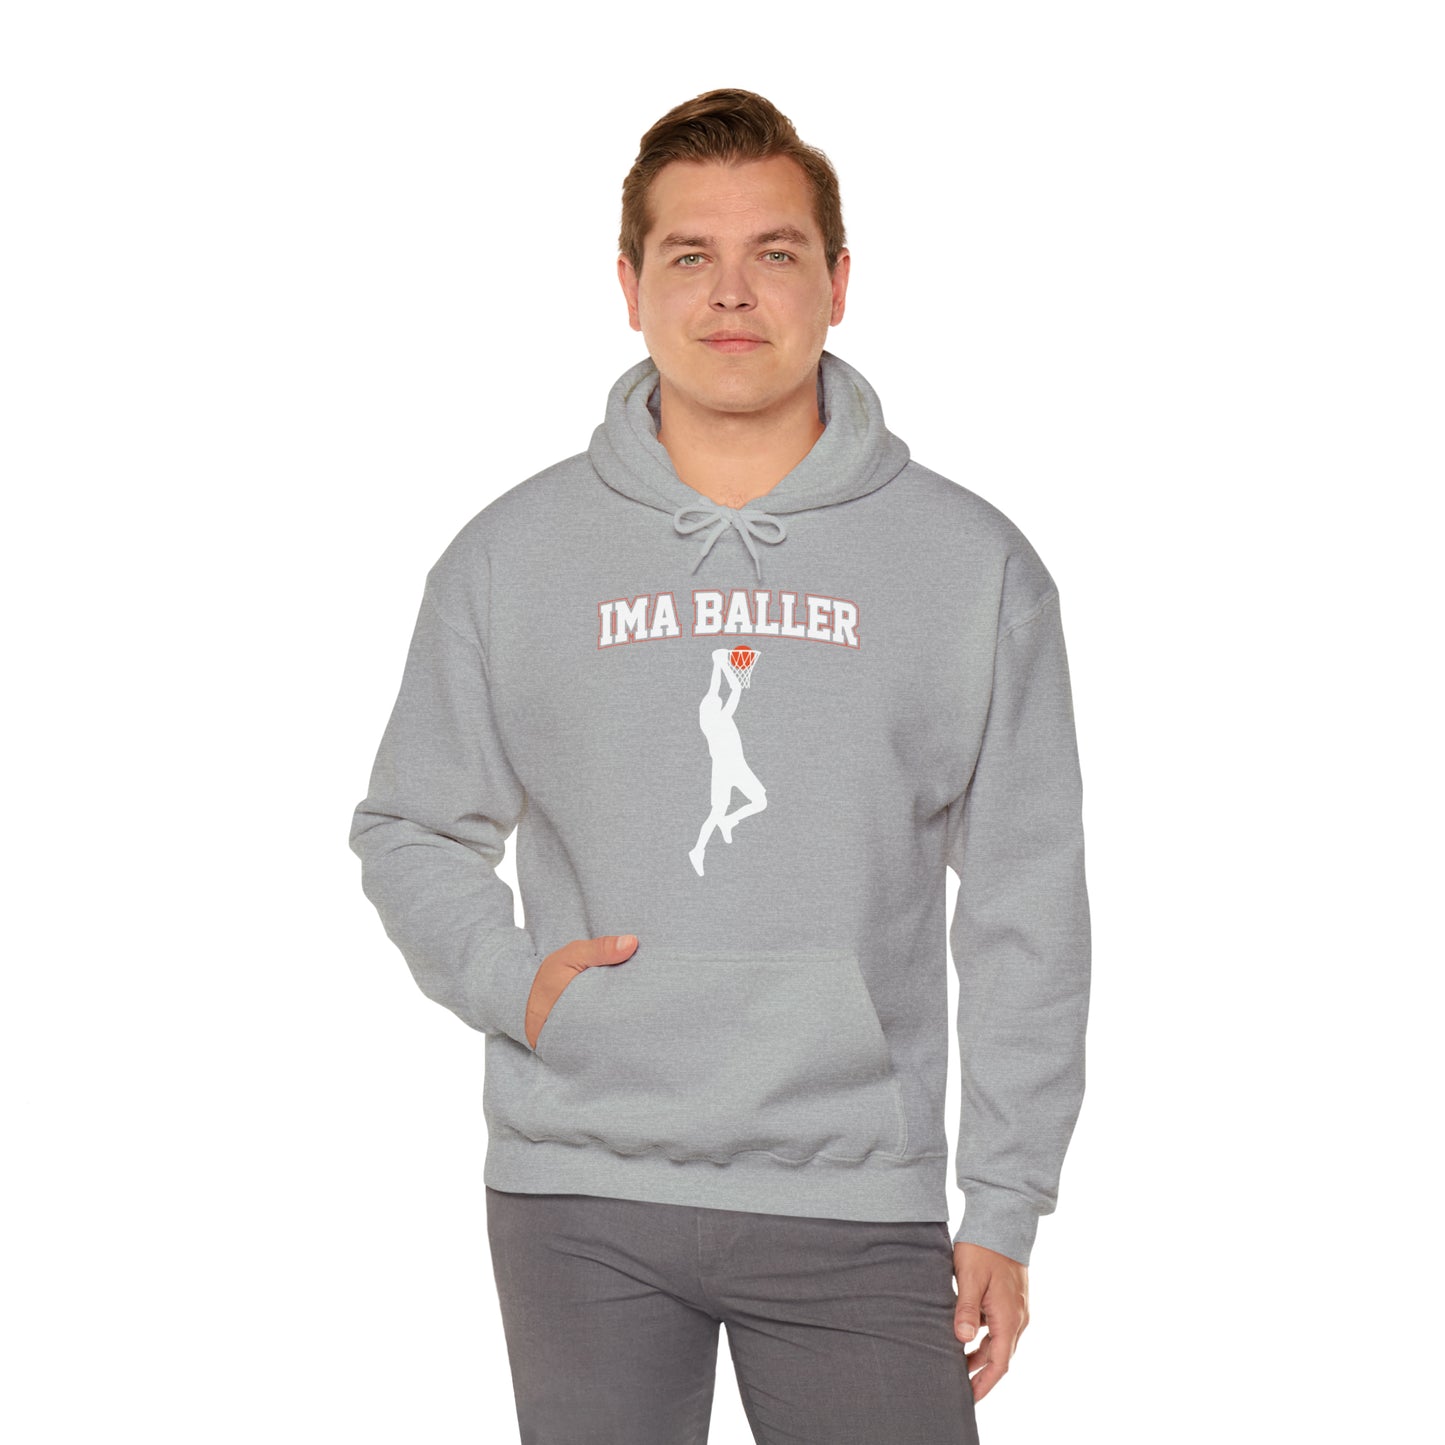 Baller - Unisex Heavy Blend™ Hooded Sweatshirt